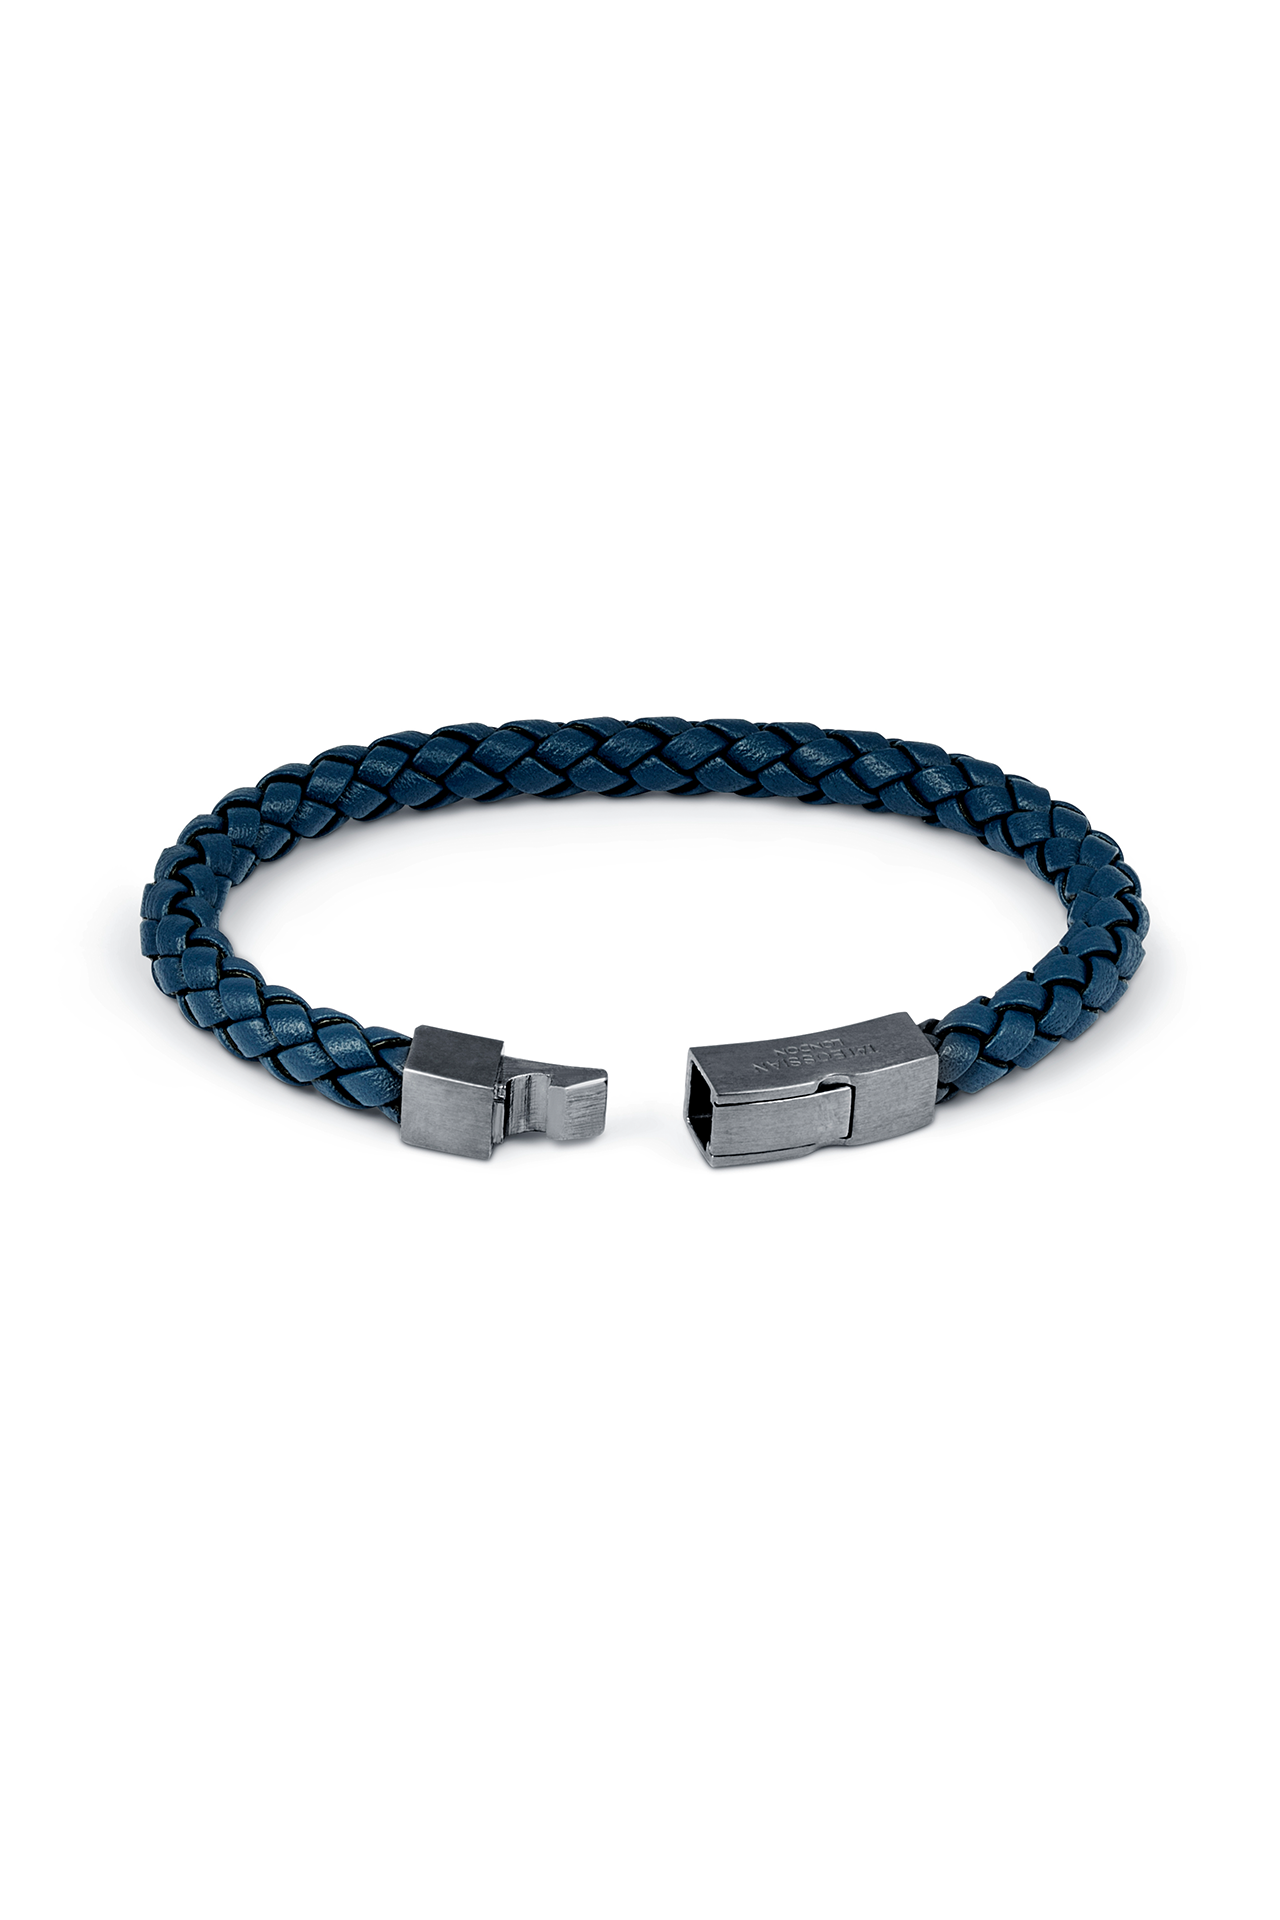 Ermenegildo Zegna Men's Double Wrap Leather Bracelet | A.K. Rikk's